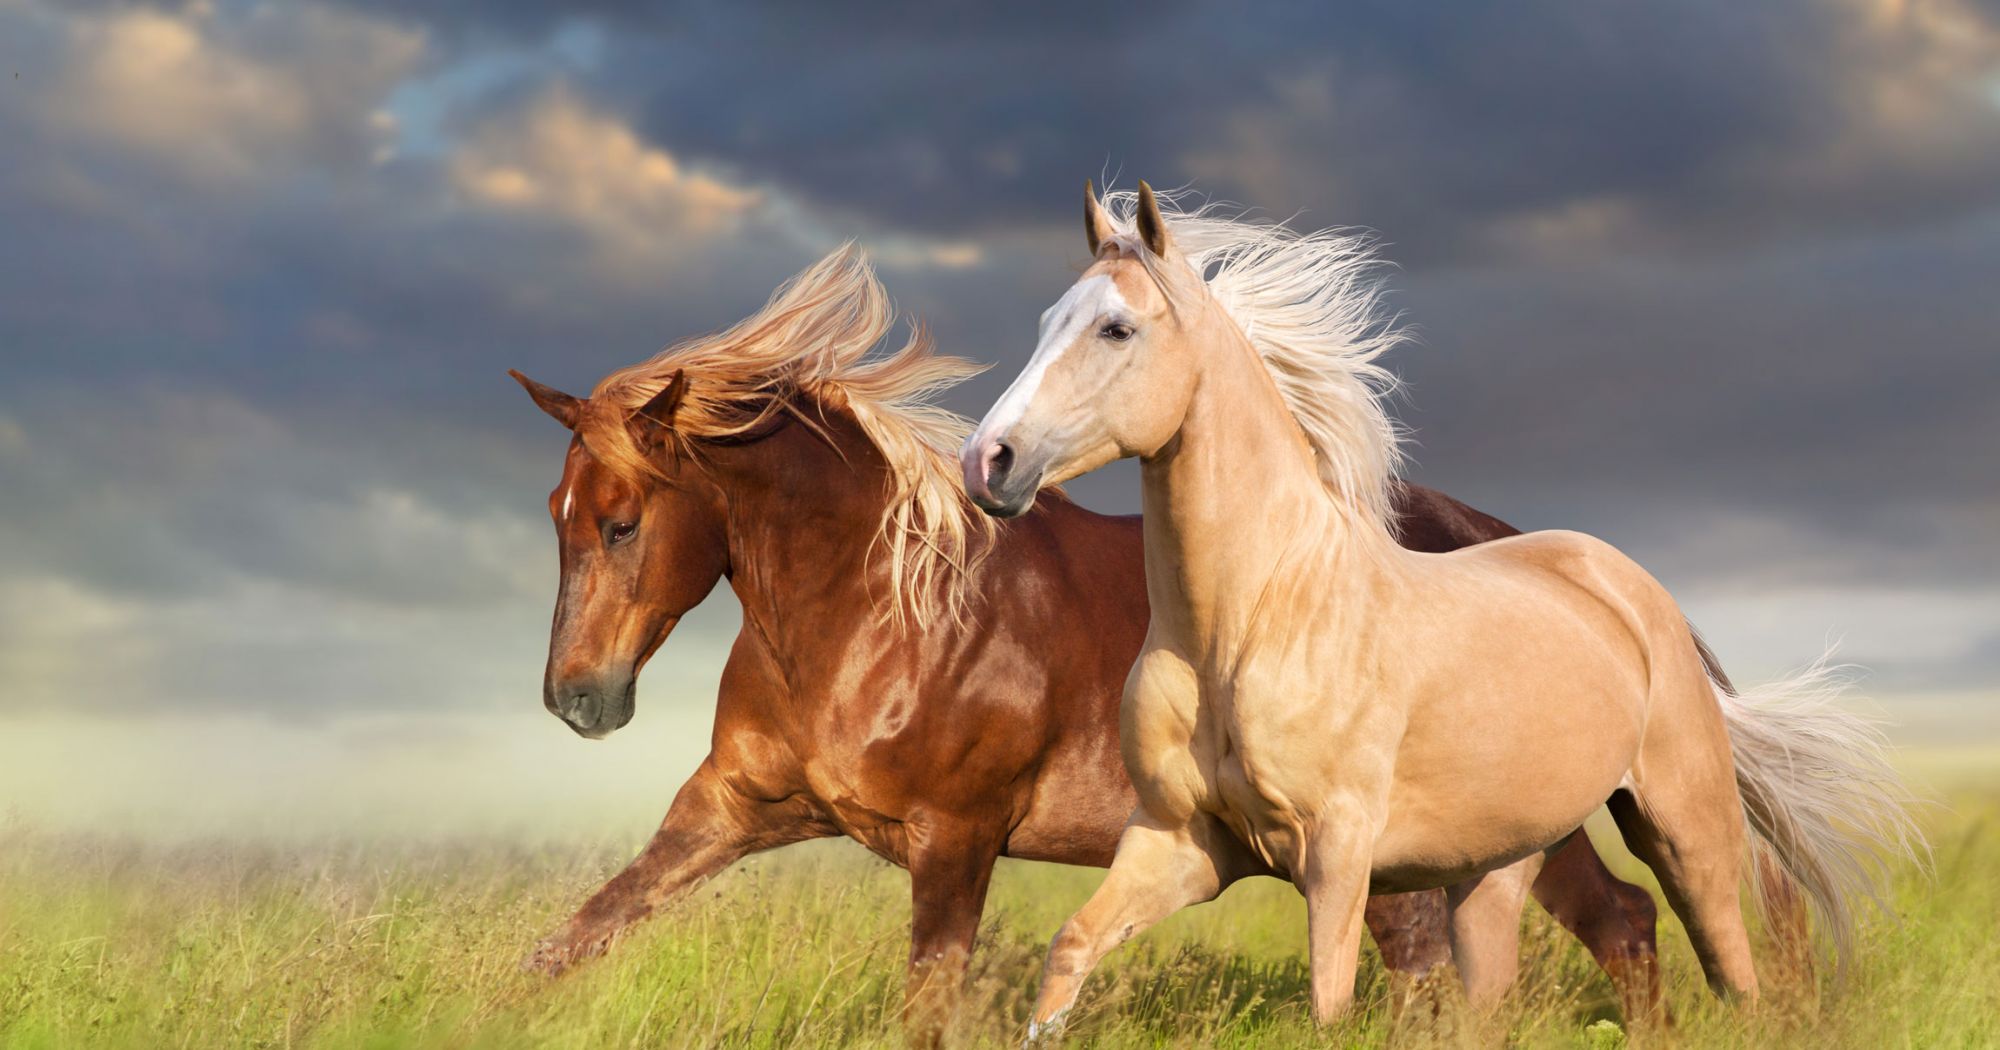 can horses eat pine needles